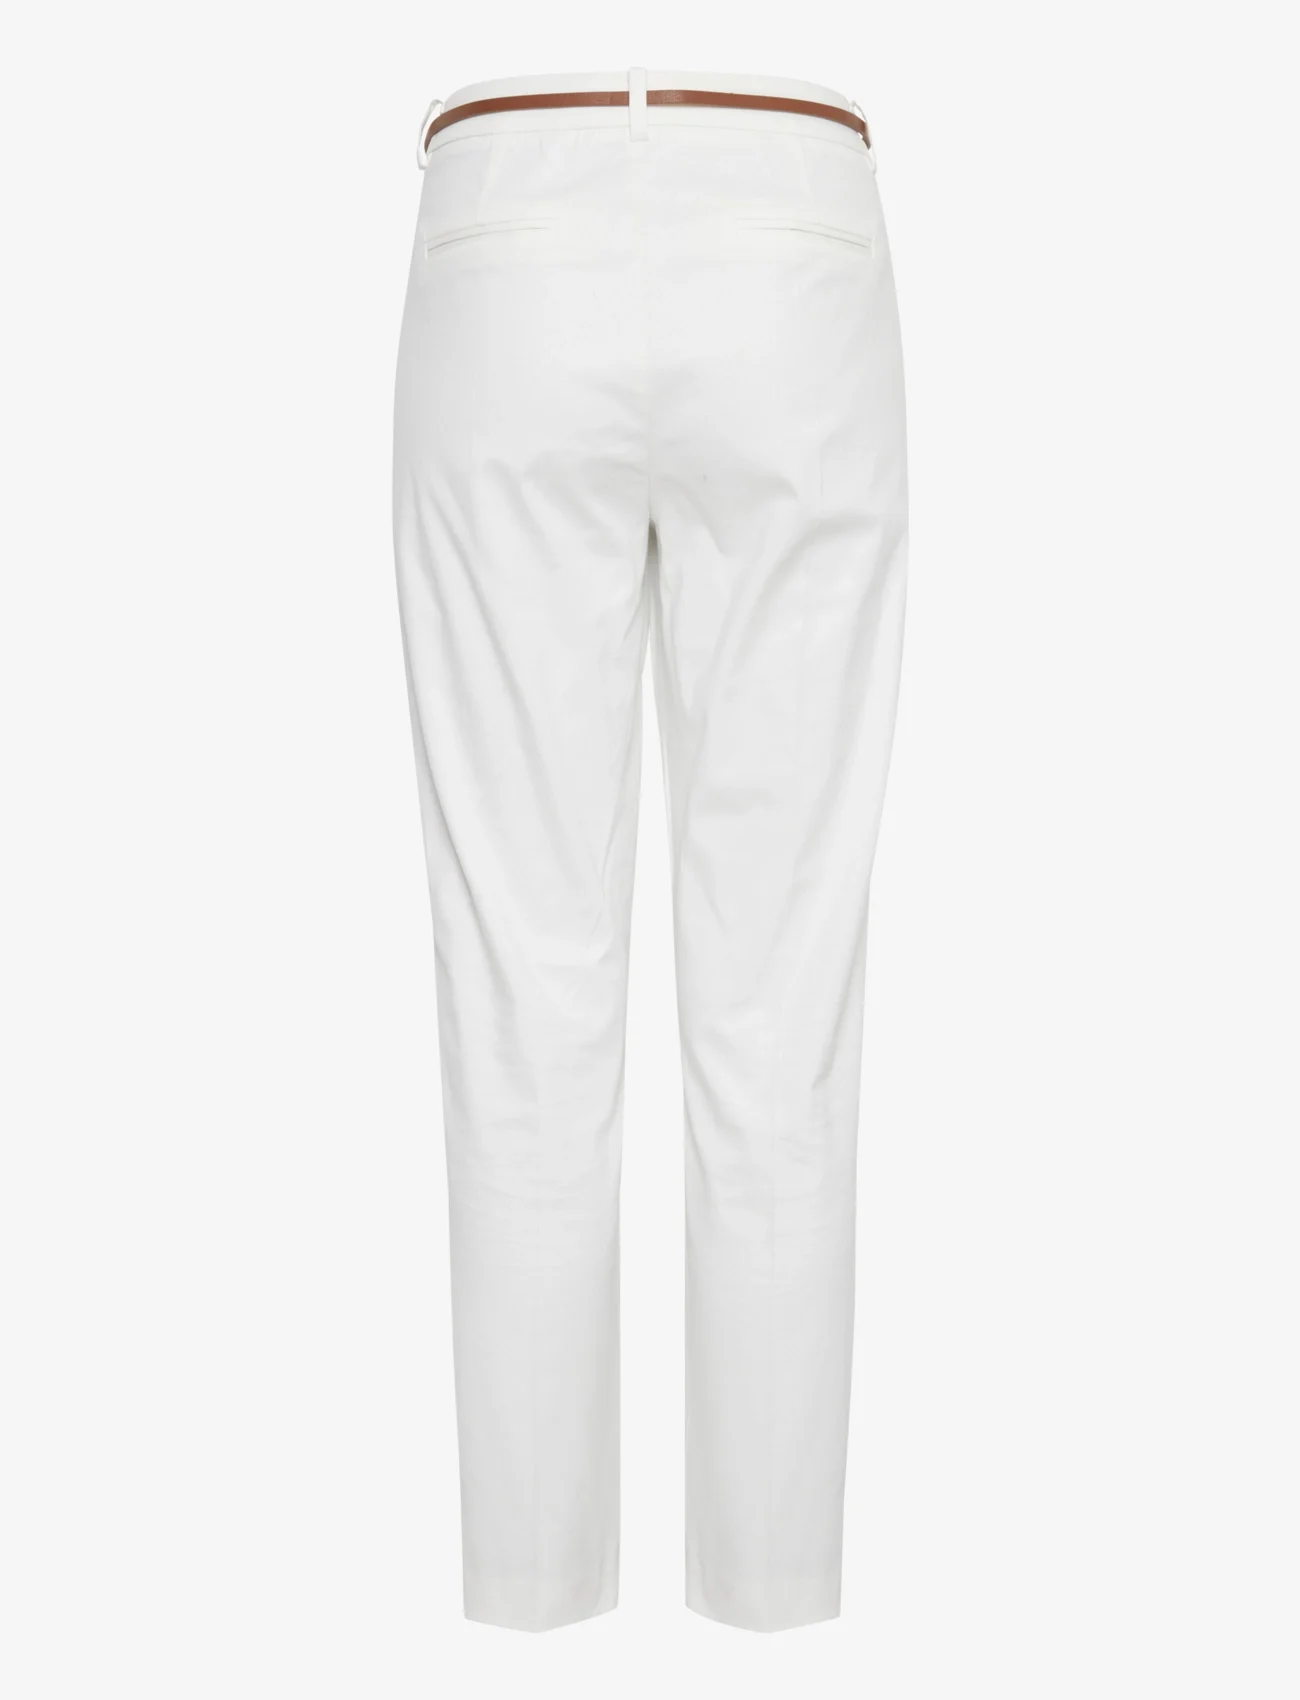 b.young - BYDAYS CIGARET PANTS 2 - - feestelijke kleding voor outlet-prijzen - off white - 1